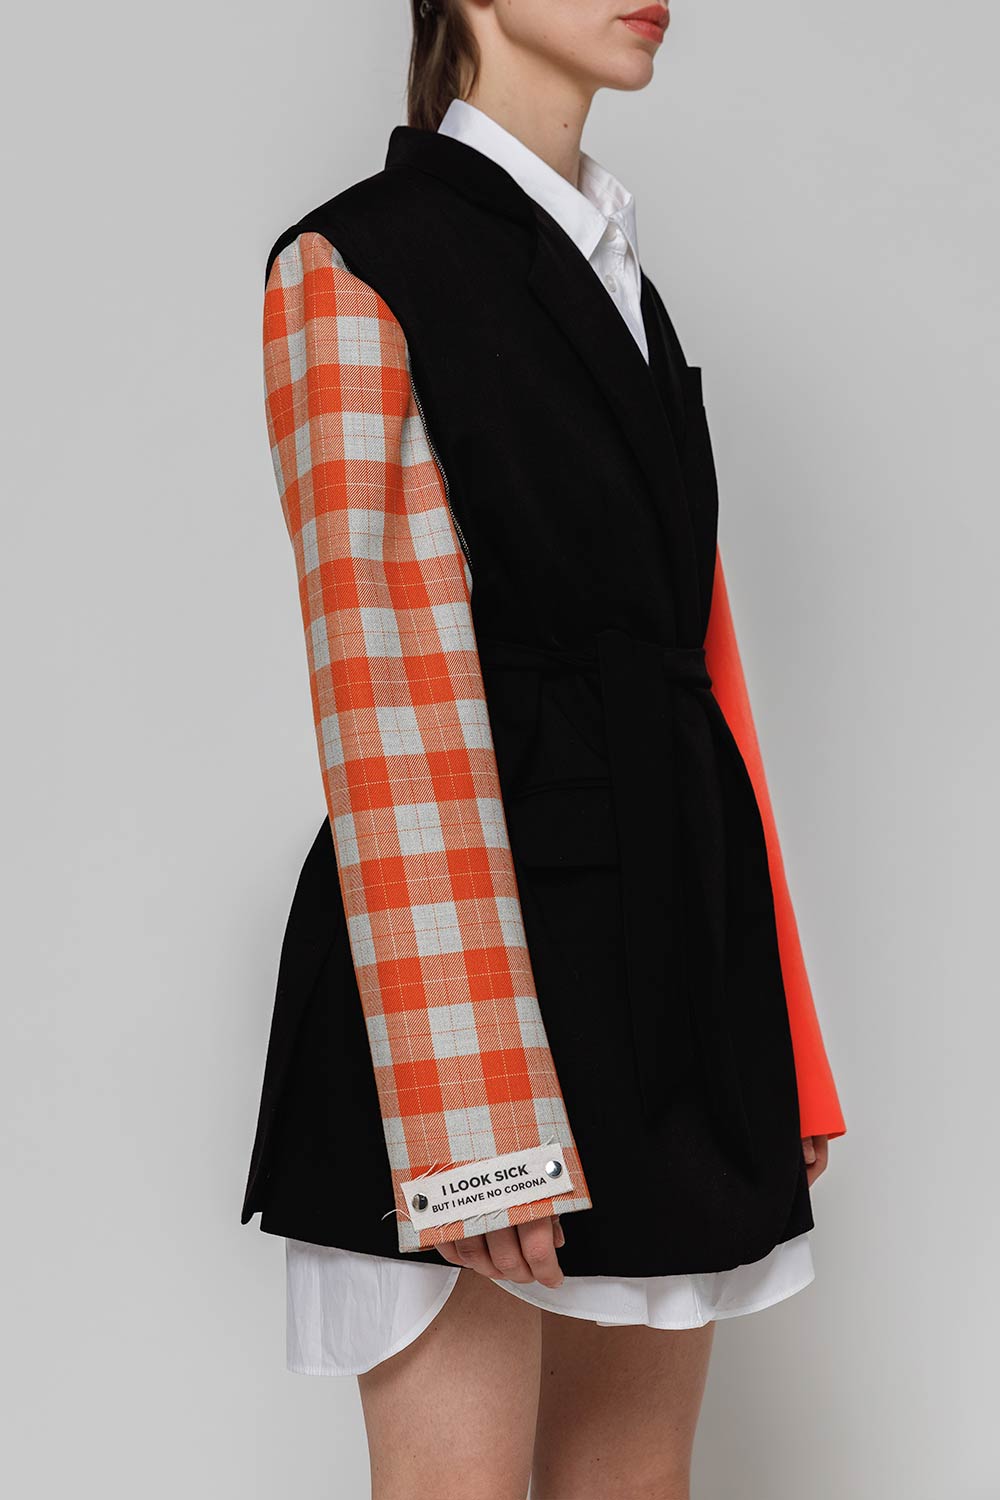 Jacket constructor black, orange-blue checkered, scarlet right side